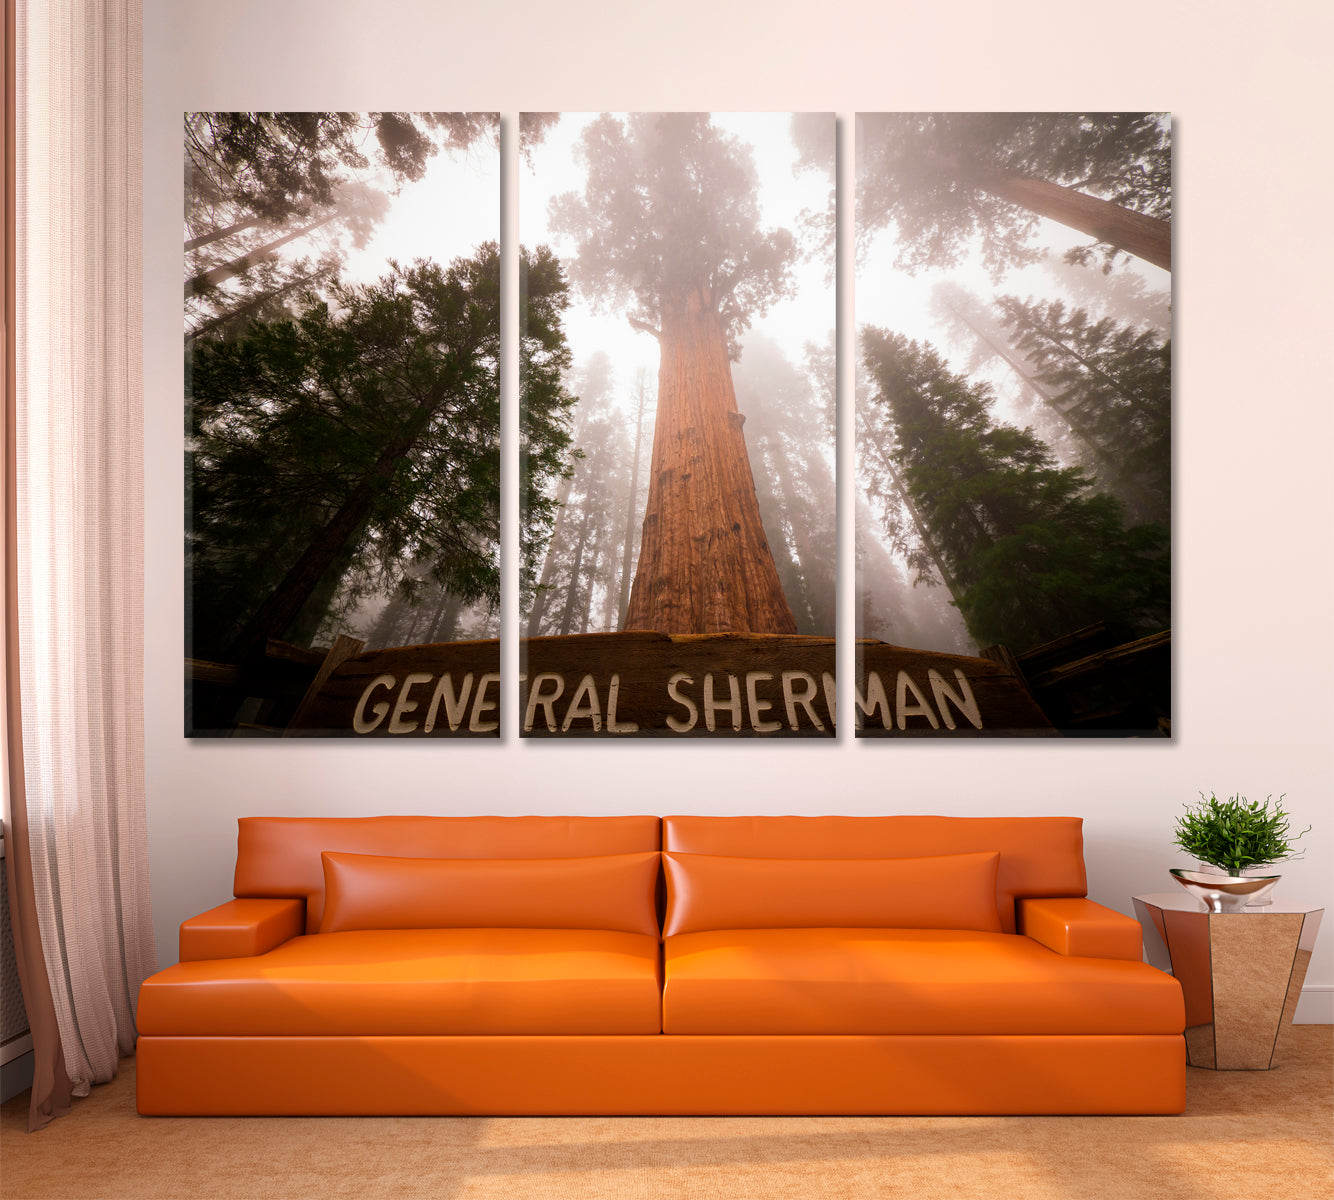 Giant Sequoia Tree General Sherman Sequoia National Park California USA Famous Landmarks Artwork Print Artesty 3 panels 36" x 24" 